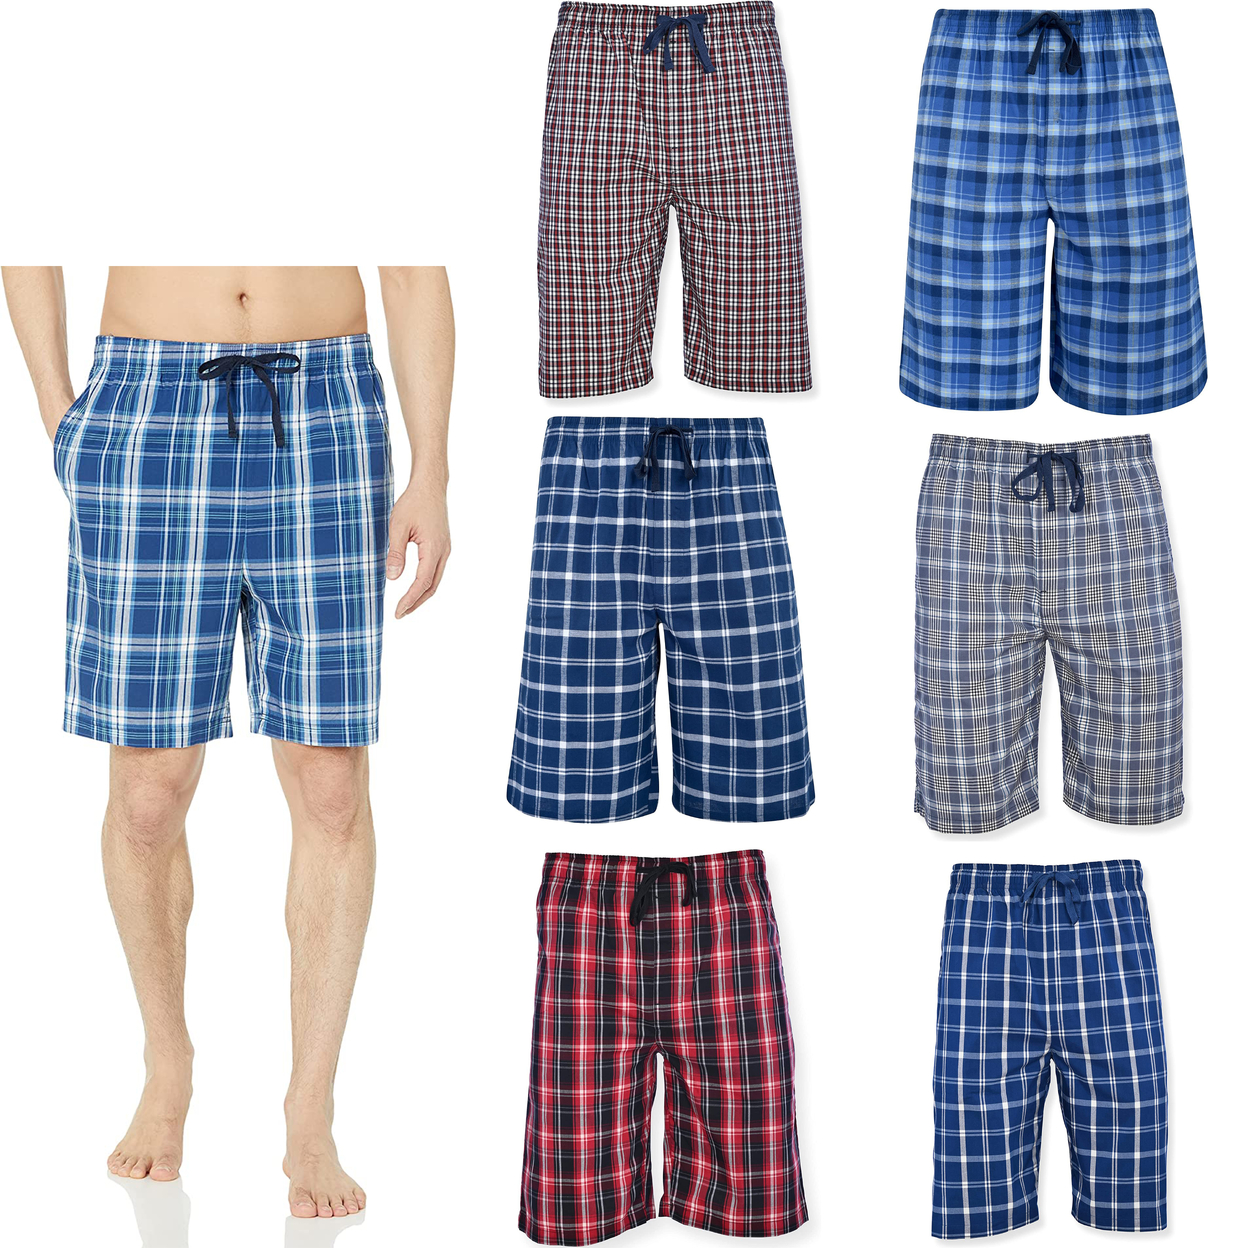 2-Pack: Men's Ultra Soft Plaid Lounge Pajama Sleep Wear Shorts - Black & Red, Large